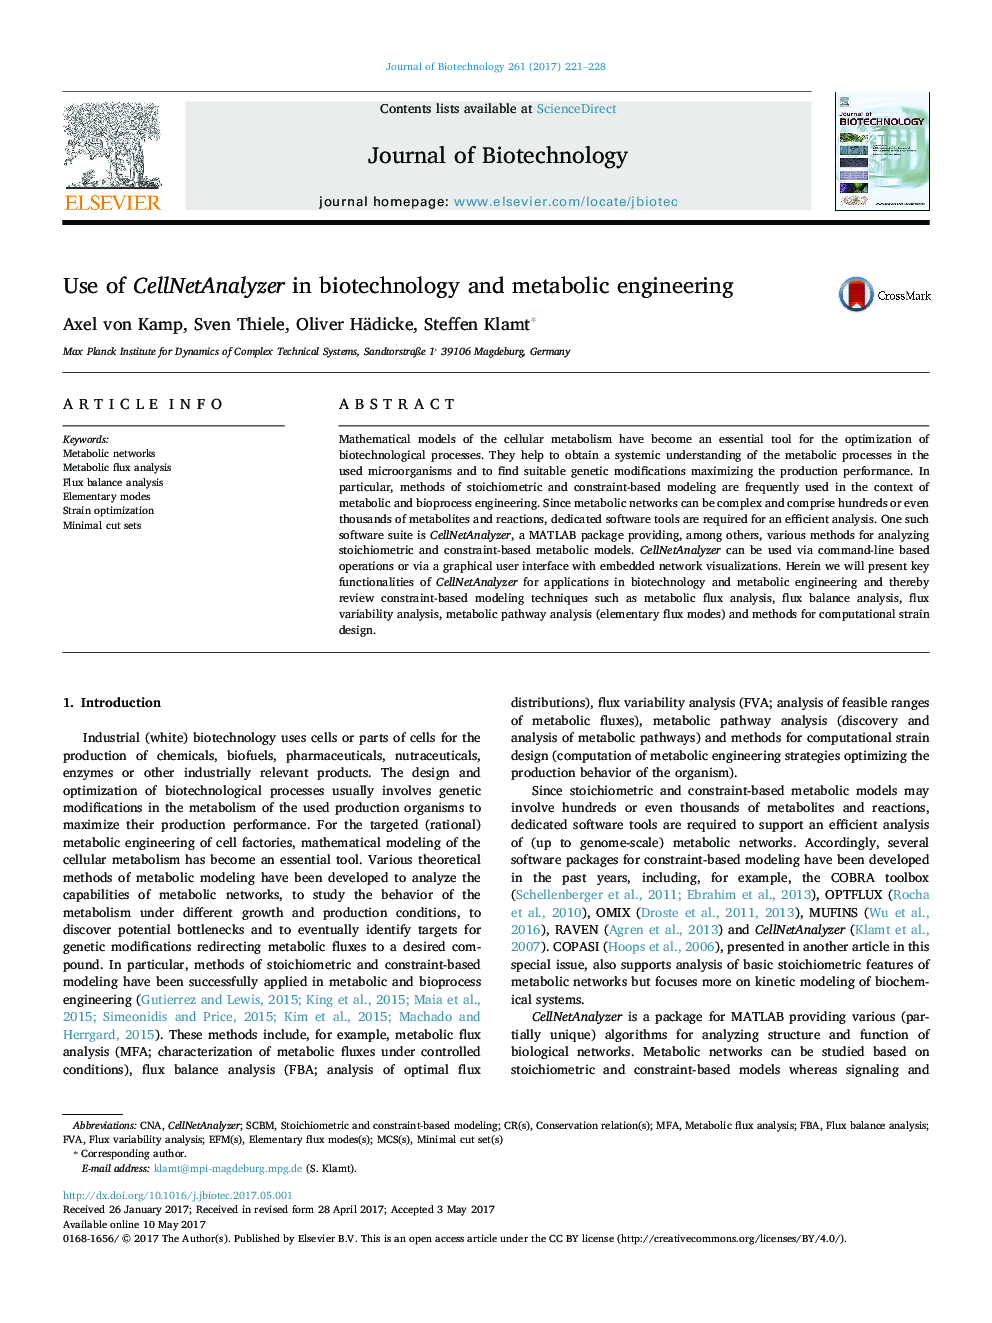 Use of CellNetAnalyzer in biotechnology and metabolic engineering